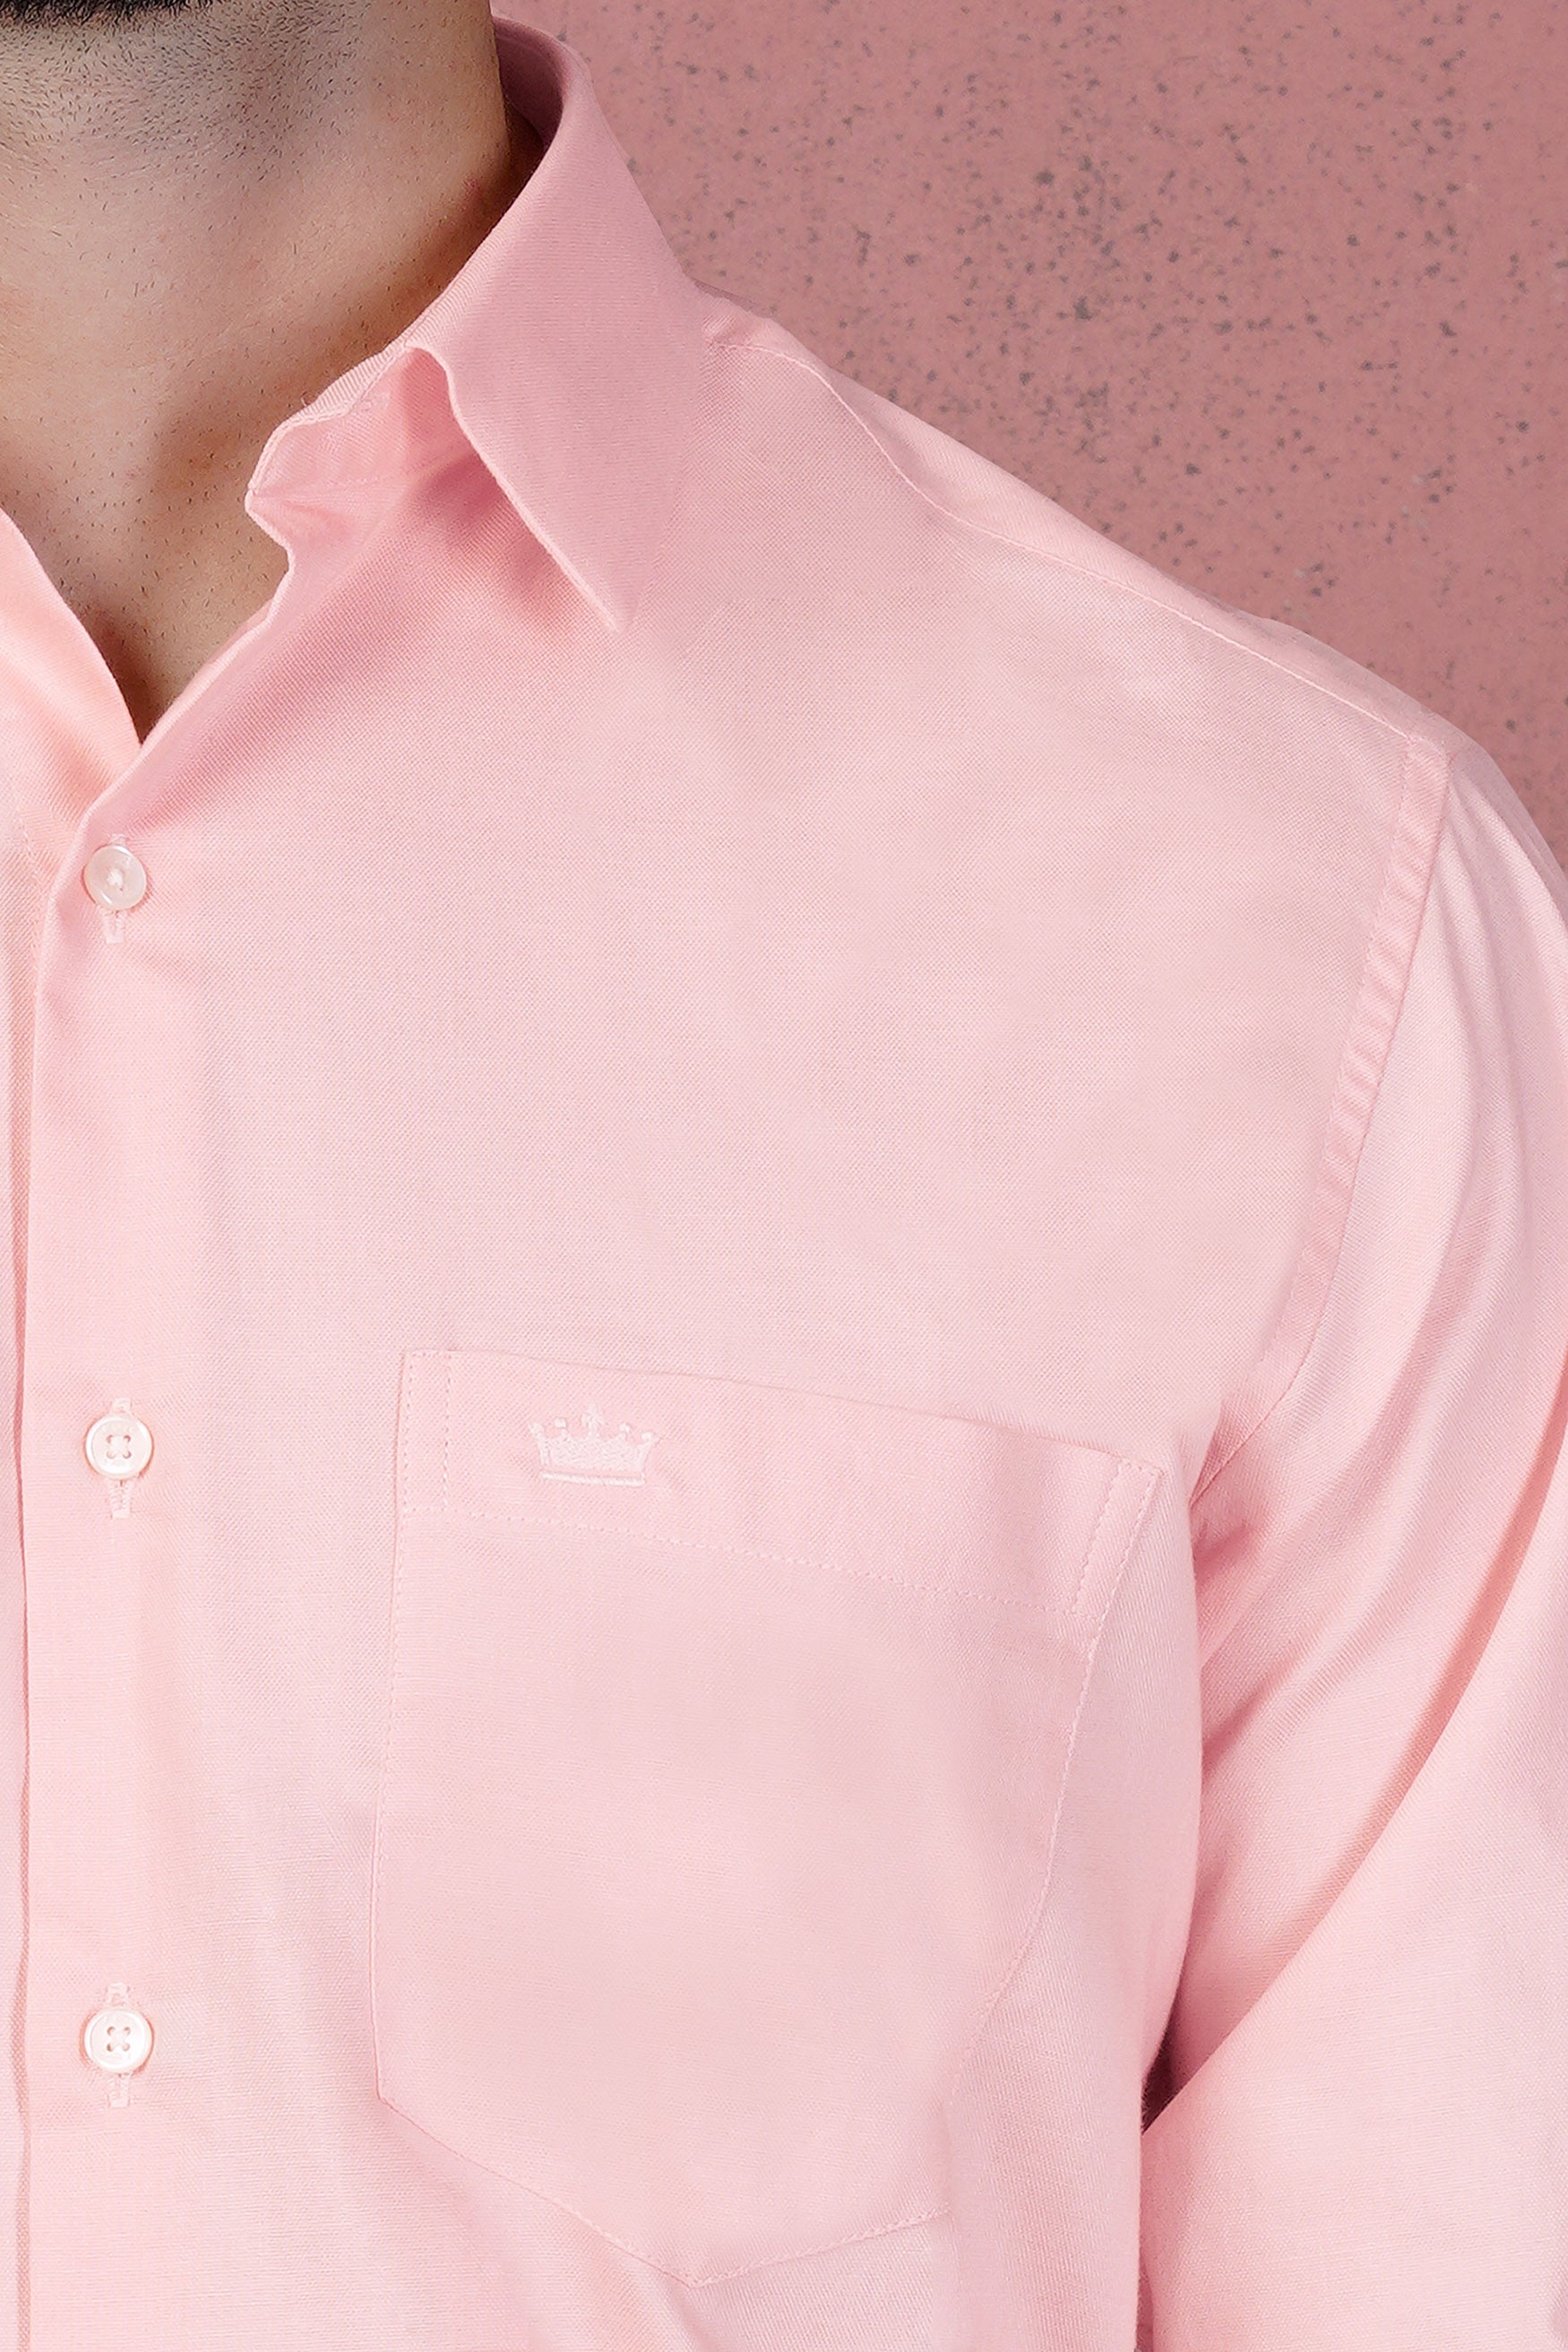 Oyster Pink Royal Oxford Shirt